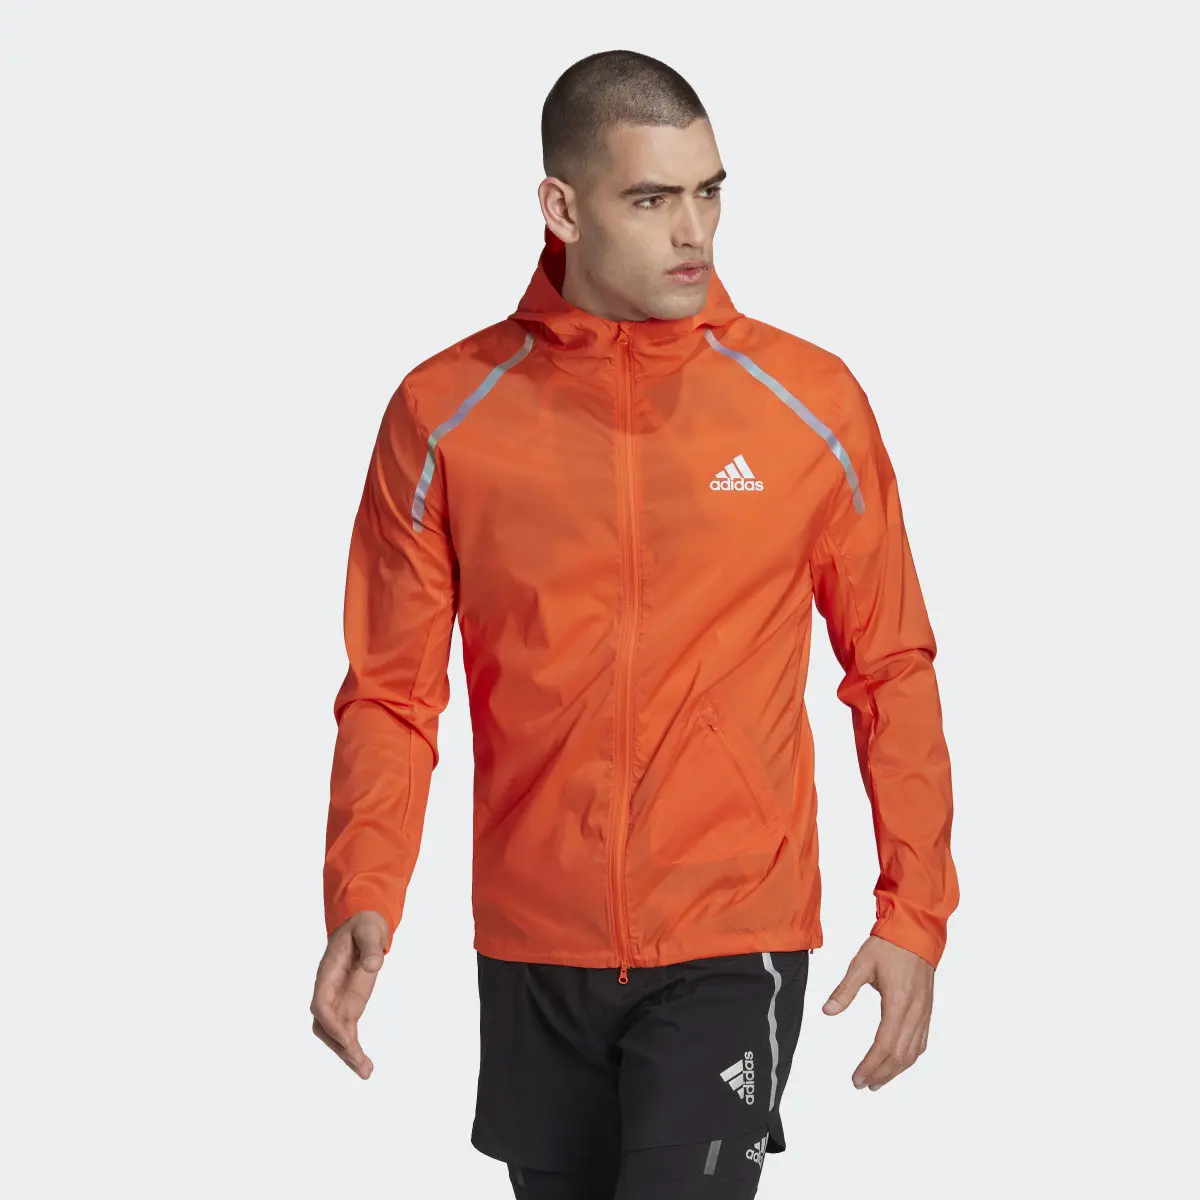 Adidas Marathon Running Jacket. 2